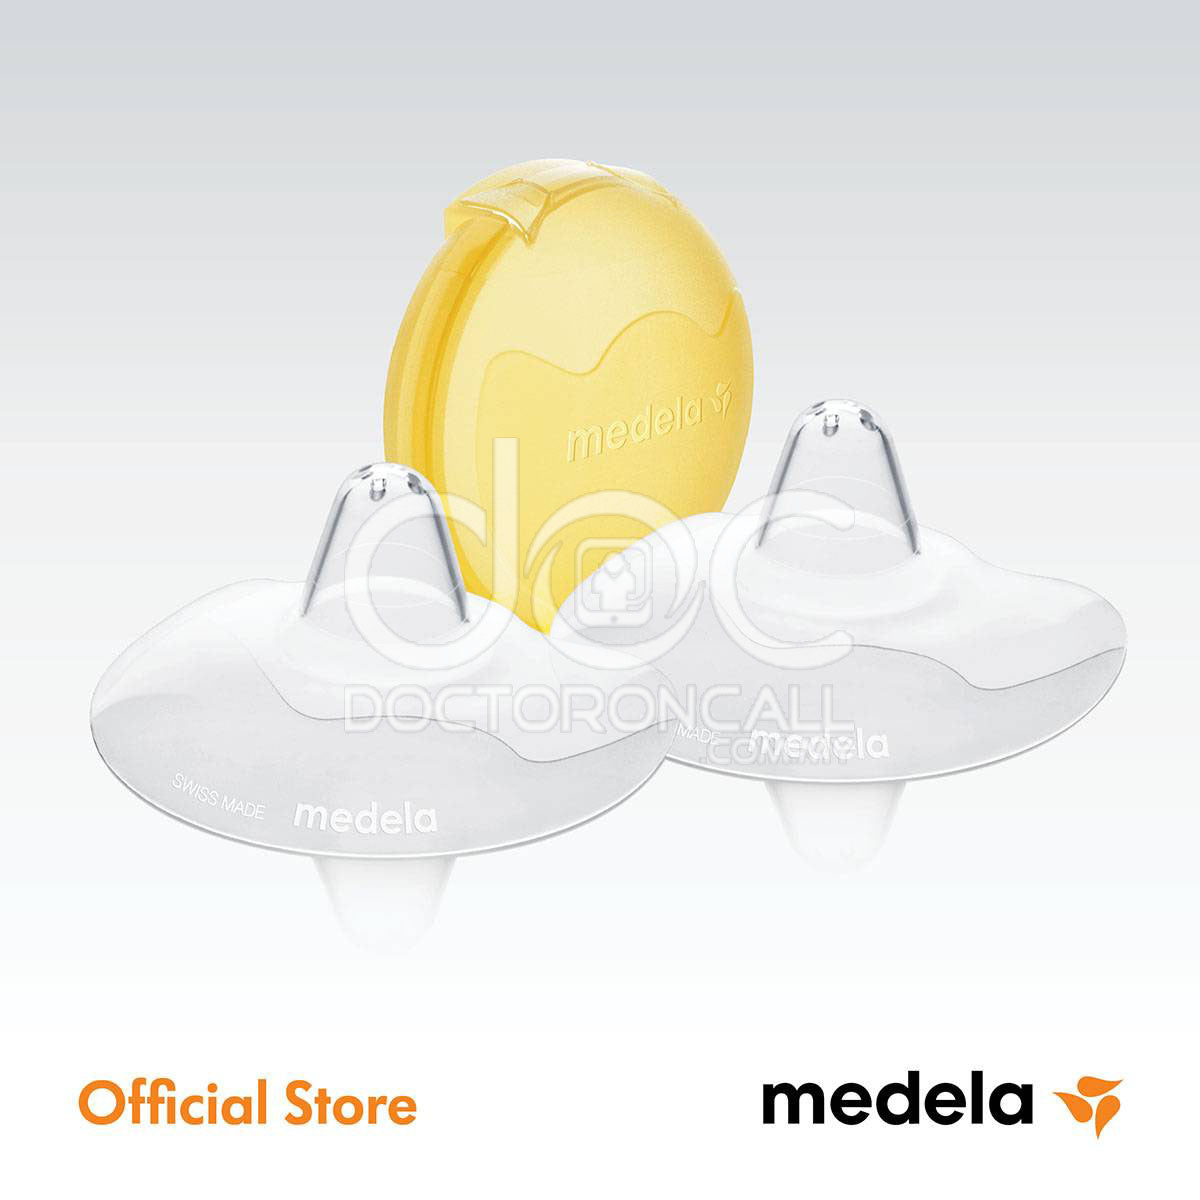 Medela Contact Nipple Shields 2s L (24mm) - DoctorOnCall Online Pharmacy